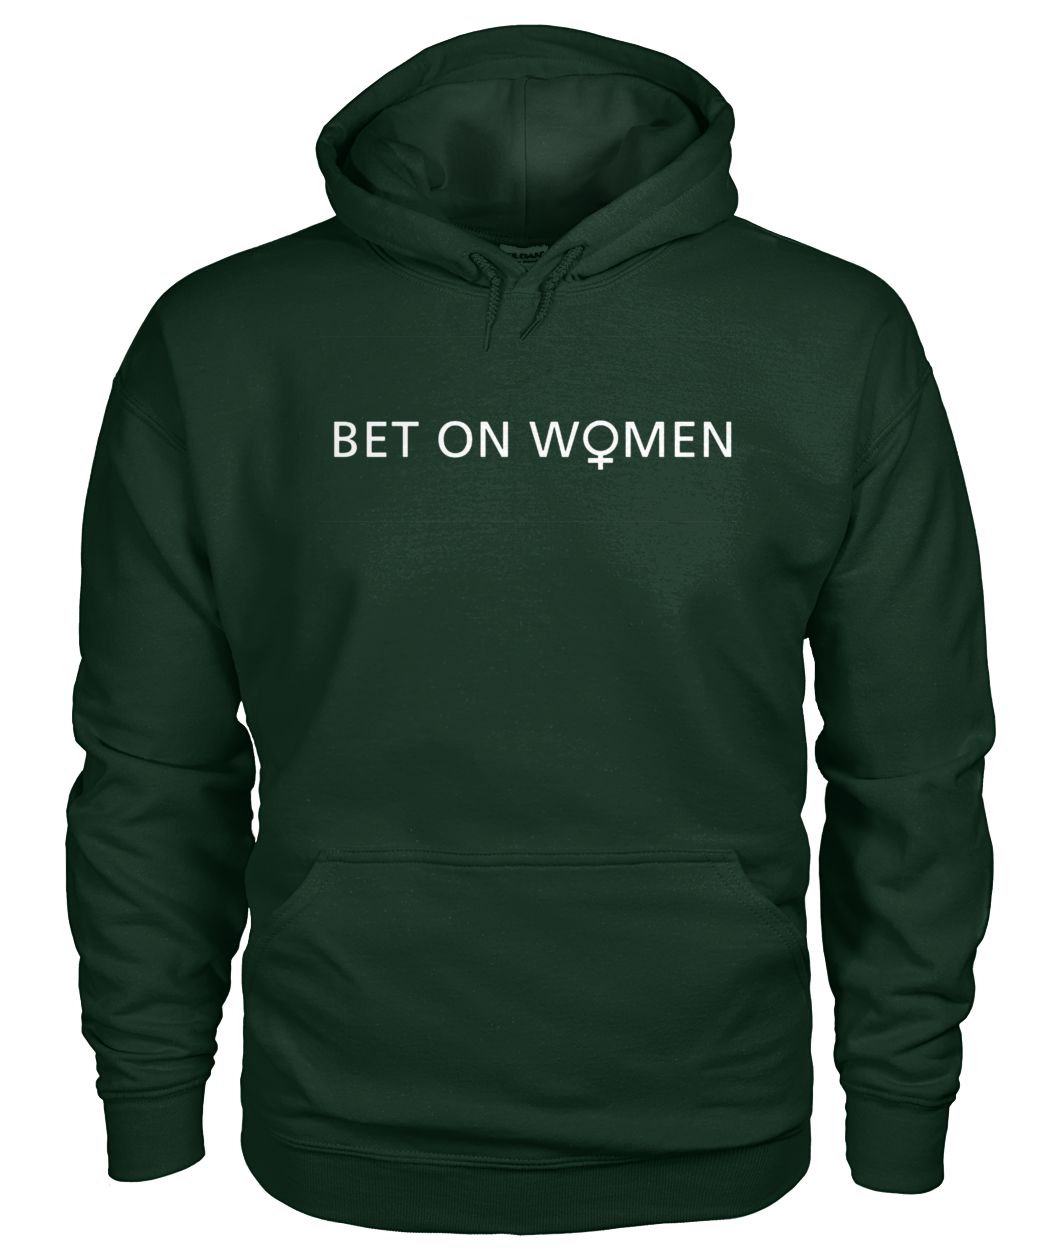 Bet on women gildan hoodie